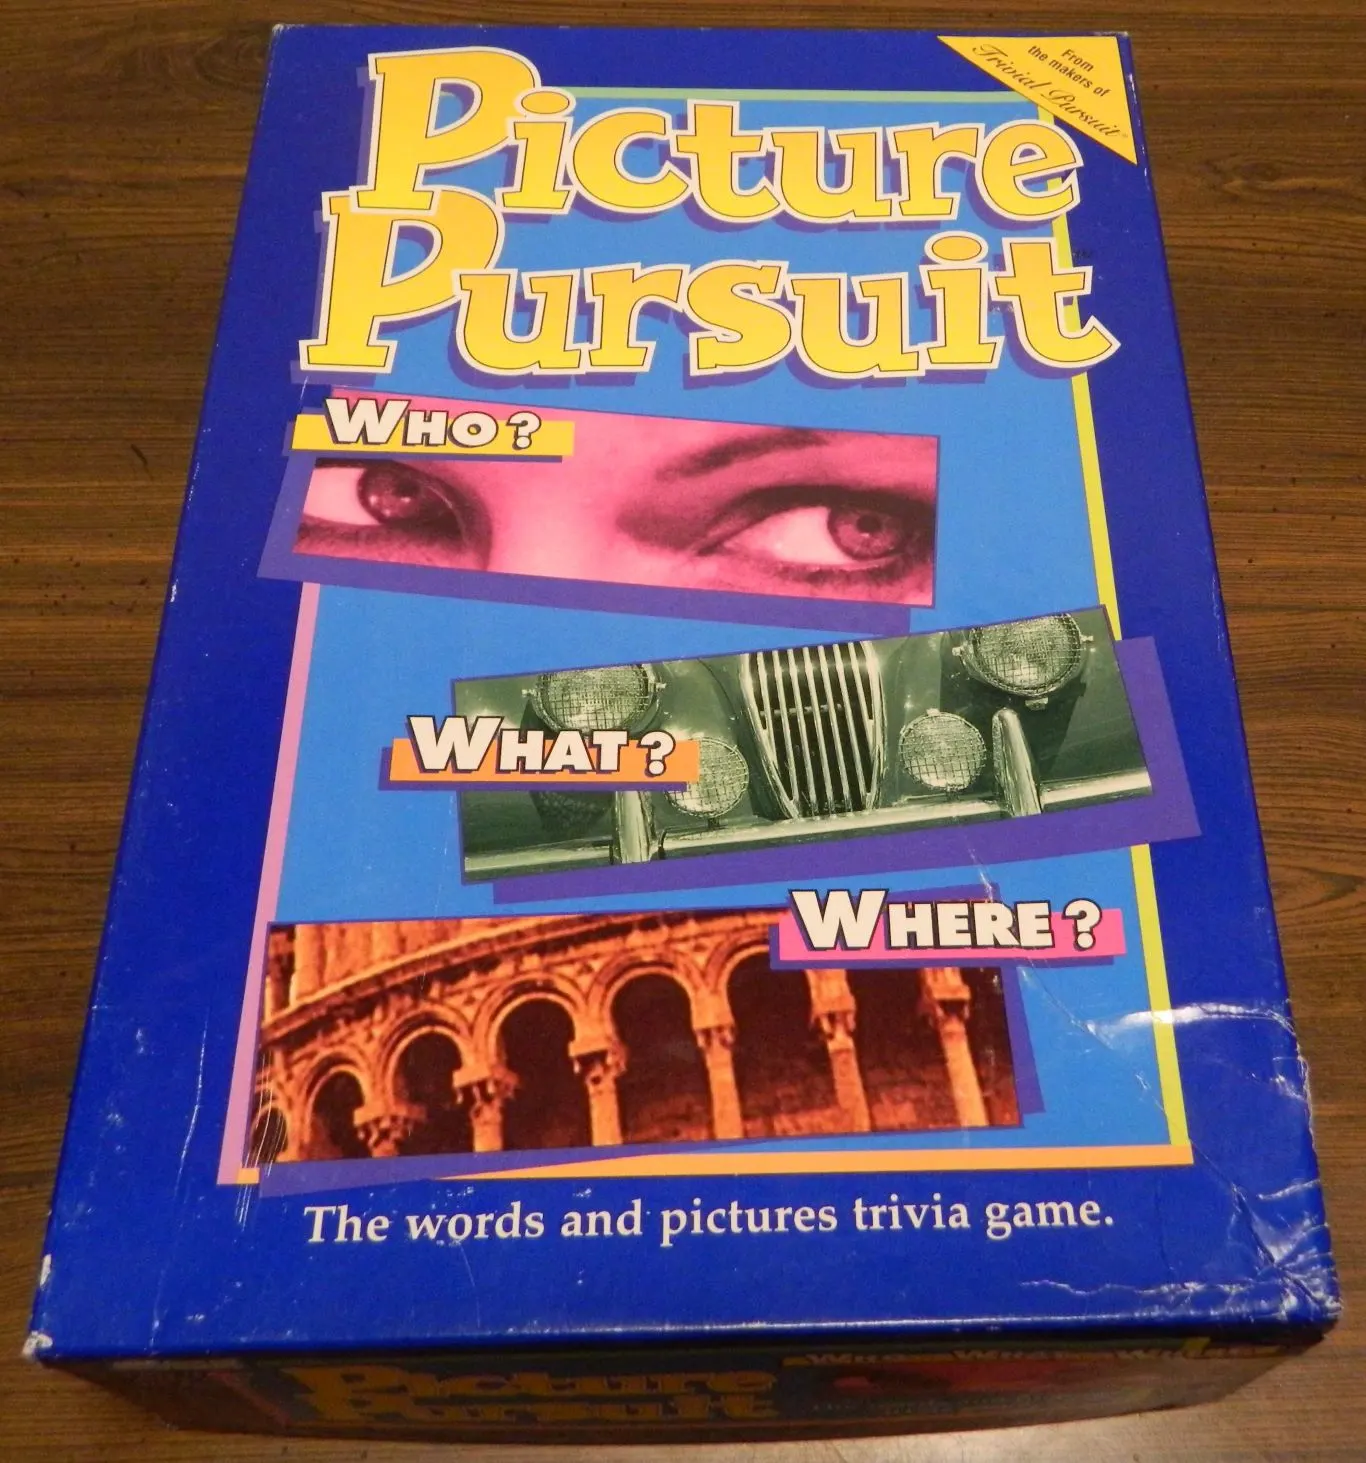 Box for Picture Pursuit